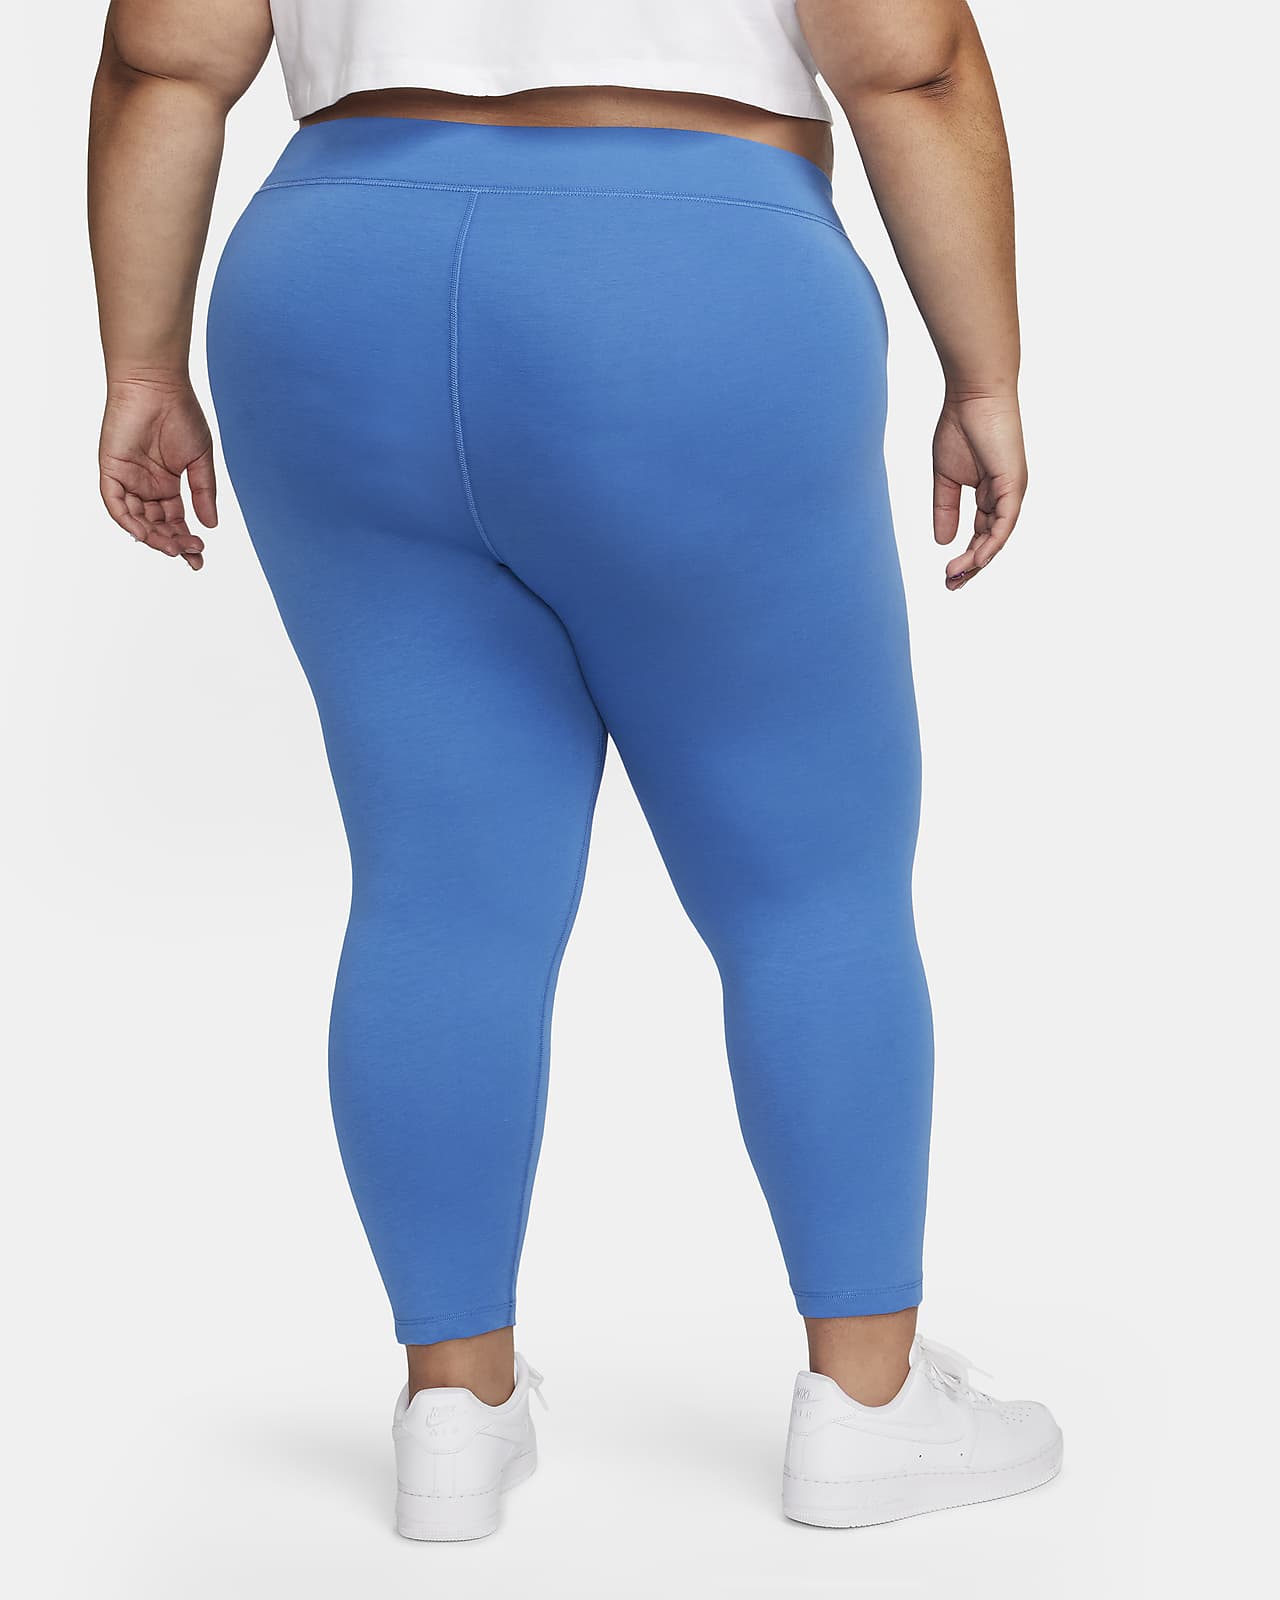 Royal Blue Butt Lifting Yoga Pants for Women Gym Clothes Womens